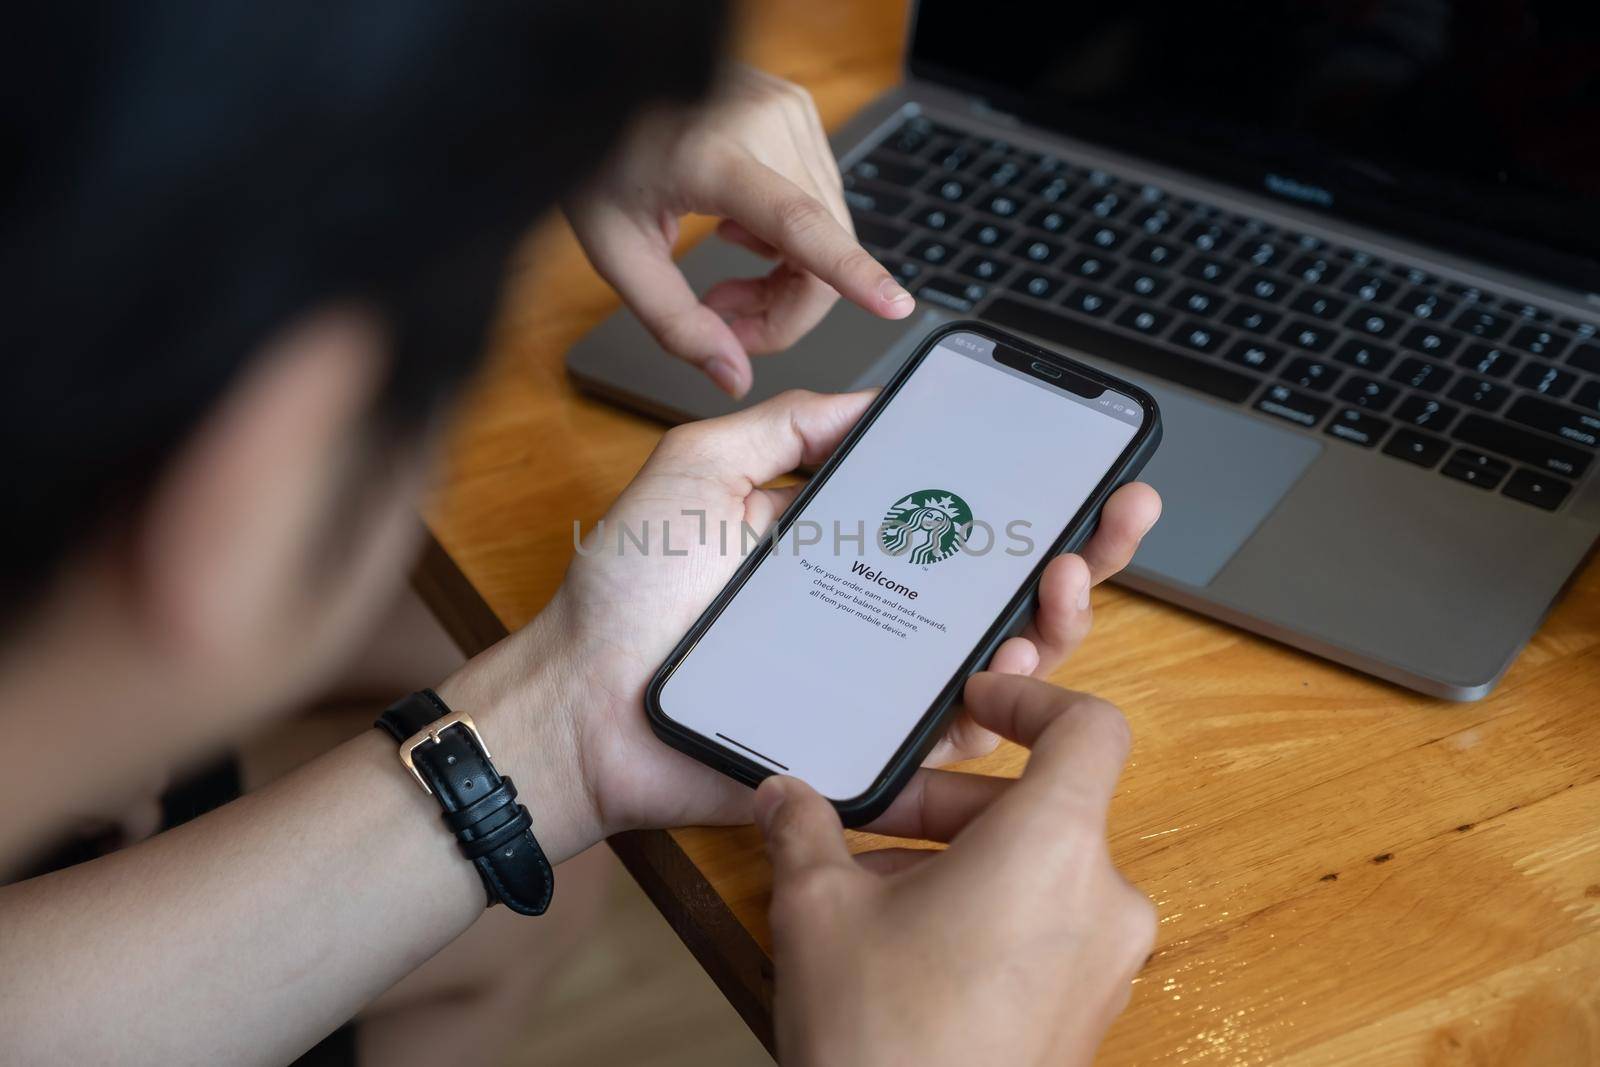 CHIANG MAI, THAILAND - JAN 23, 2021 : Starbucks app on the Apple iPhone display screen. opening online menu page of Starbucks website, Starbucks coffee shop.